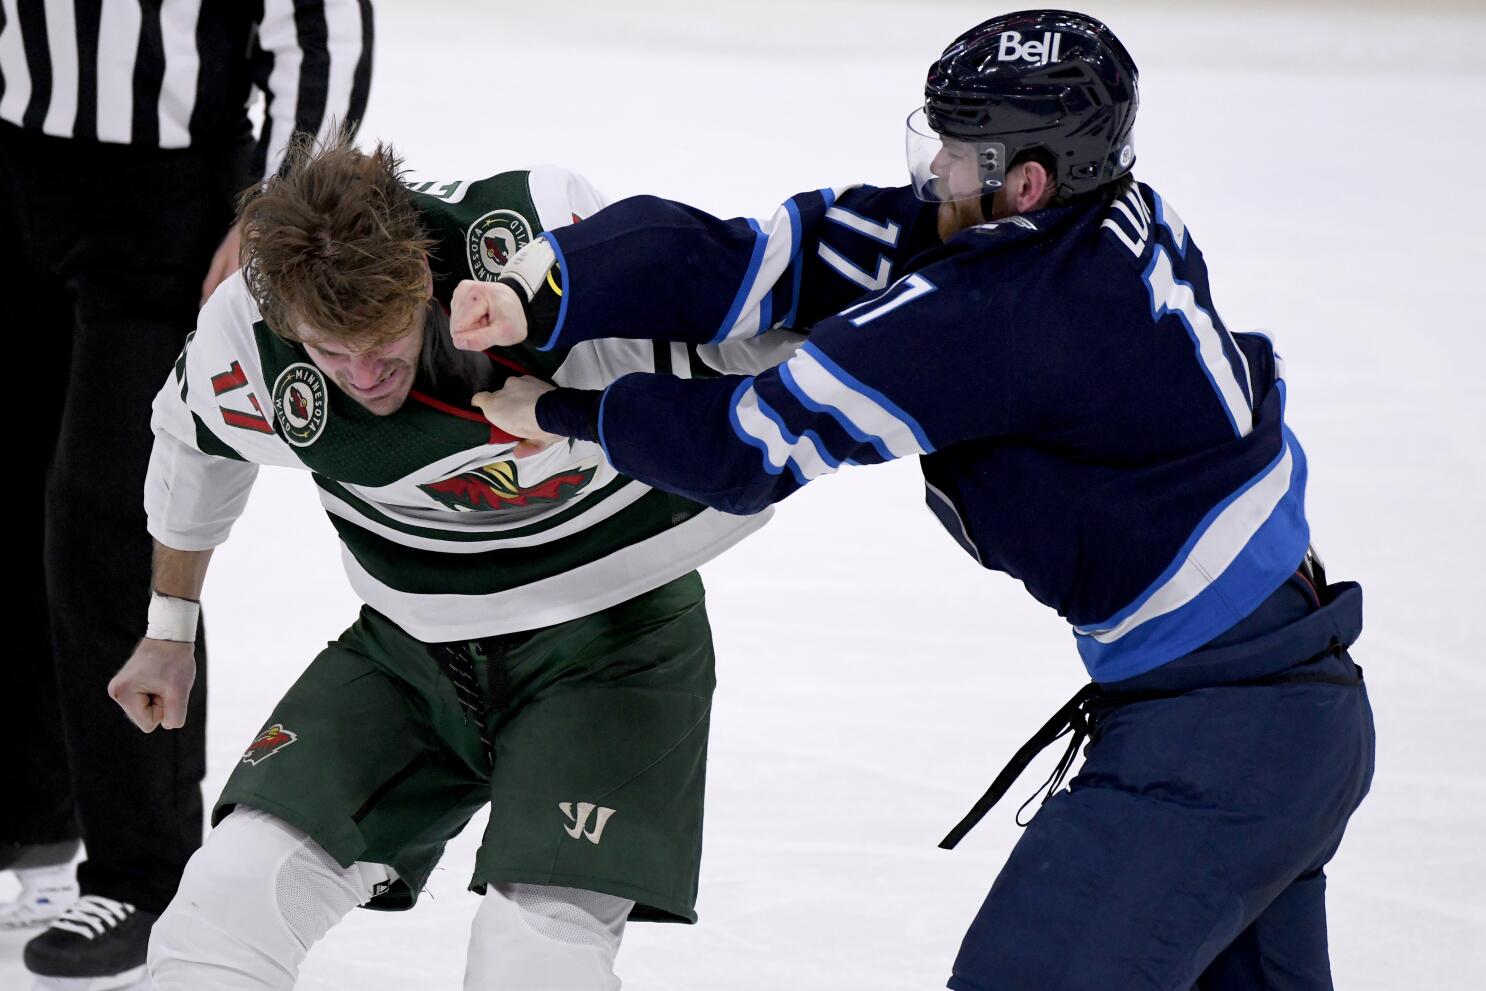 Ban fighting in the NHL - The Boston Globe